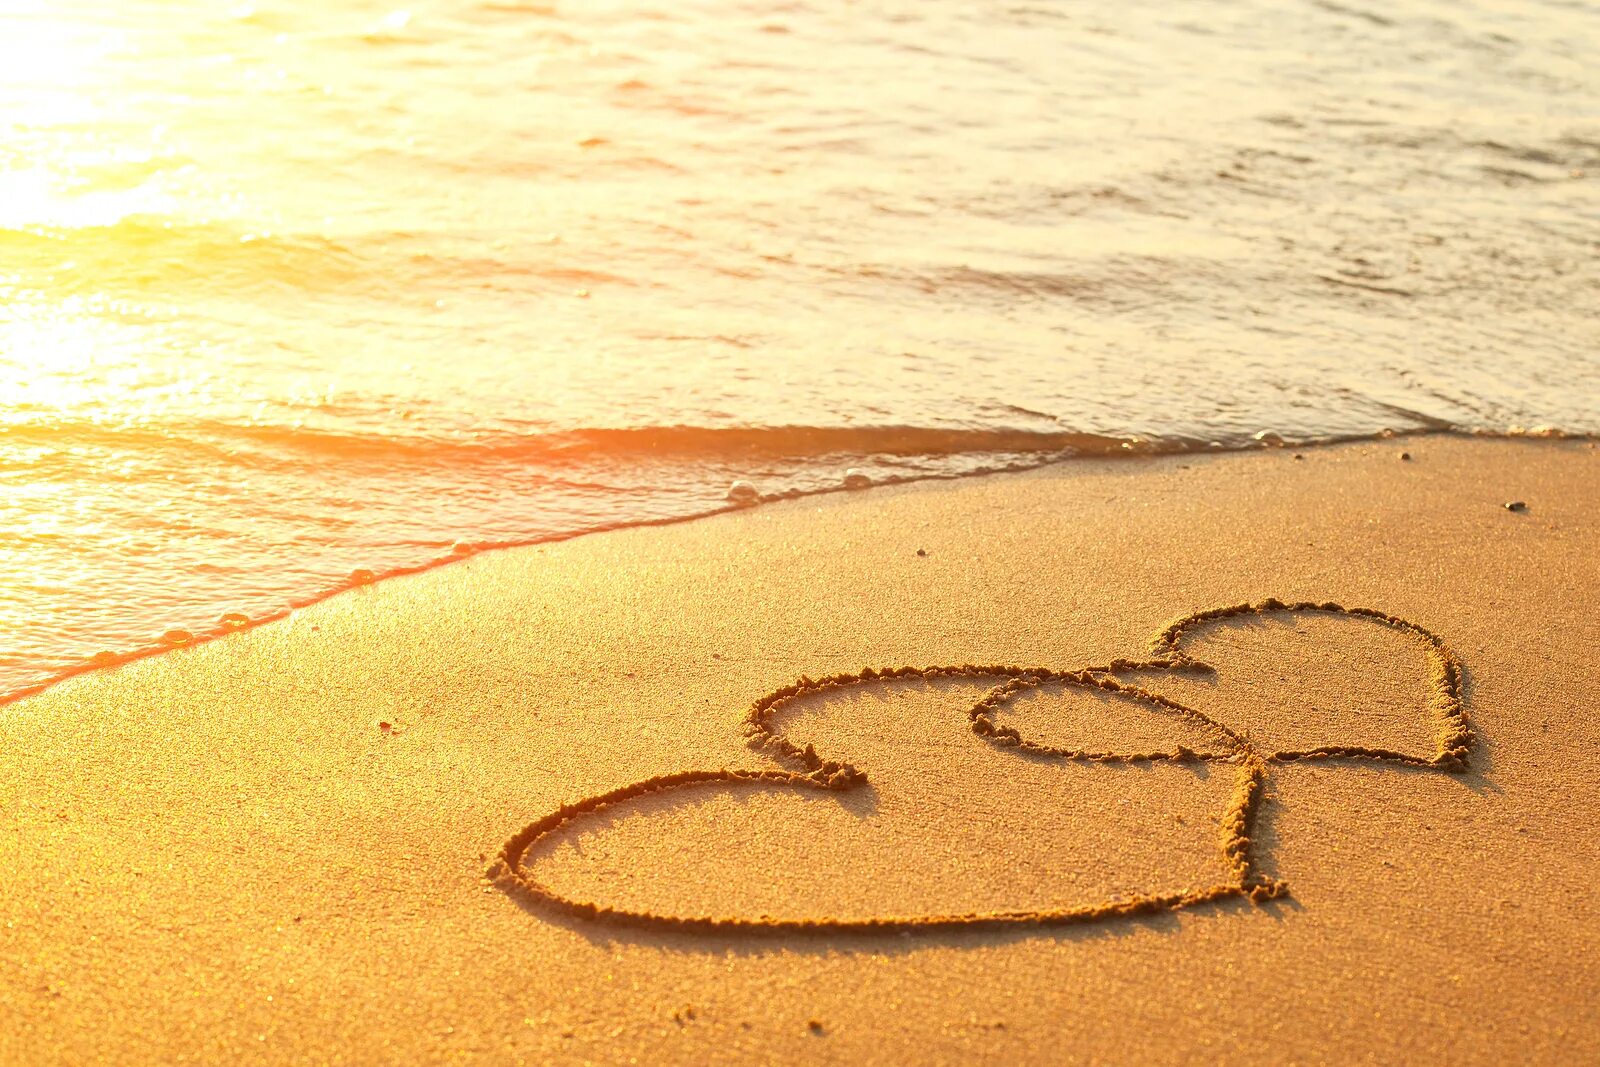 Сердце на песке. Сердечко на песке. Сердце на песке у моря. Надпись на песке.